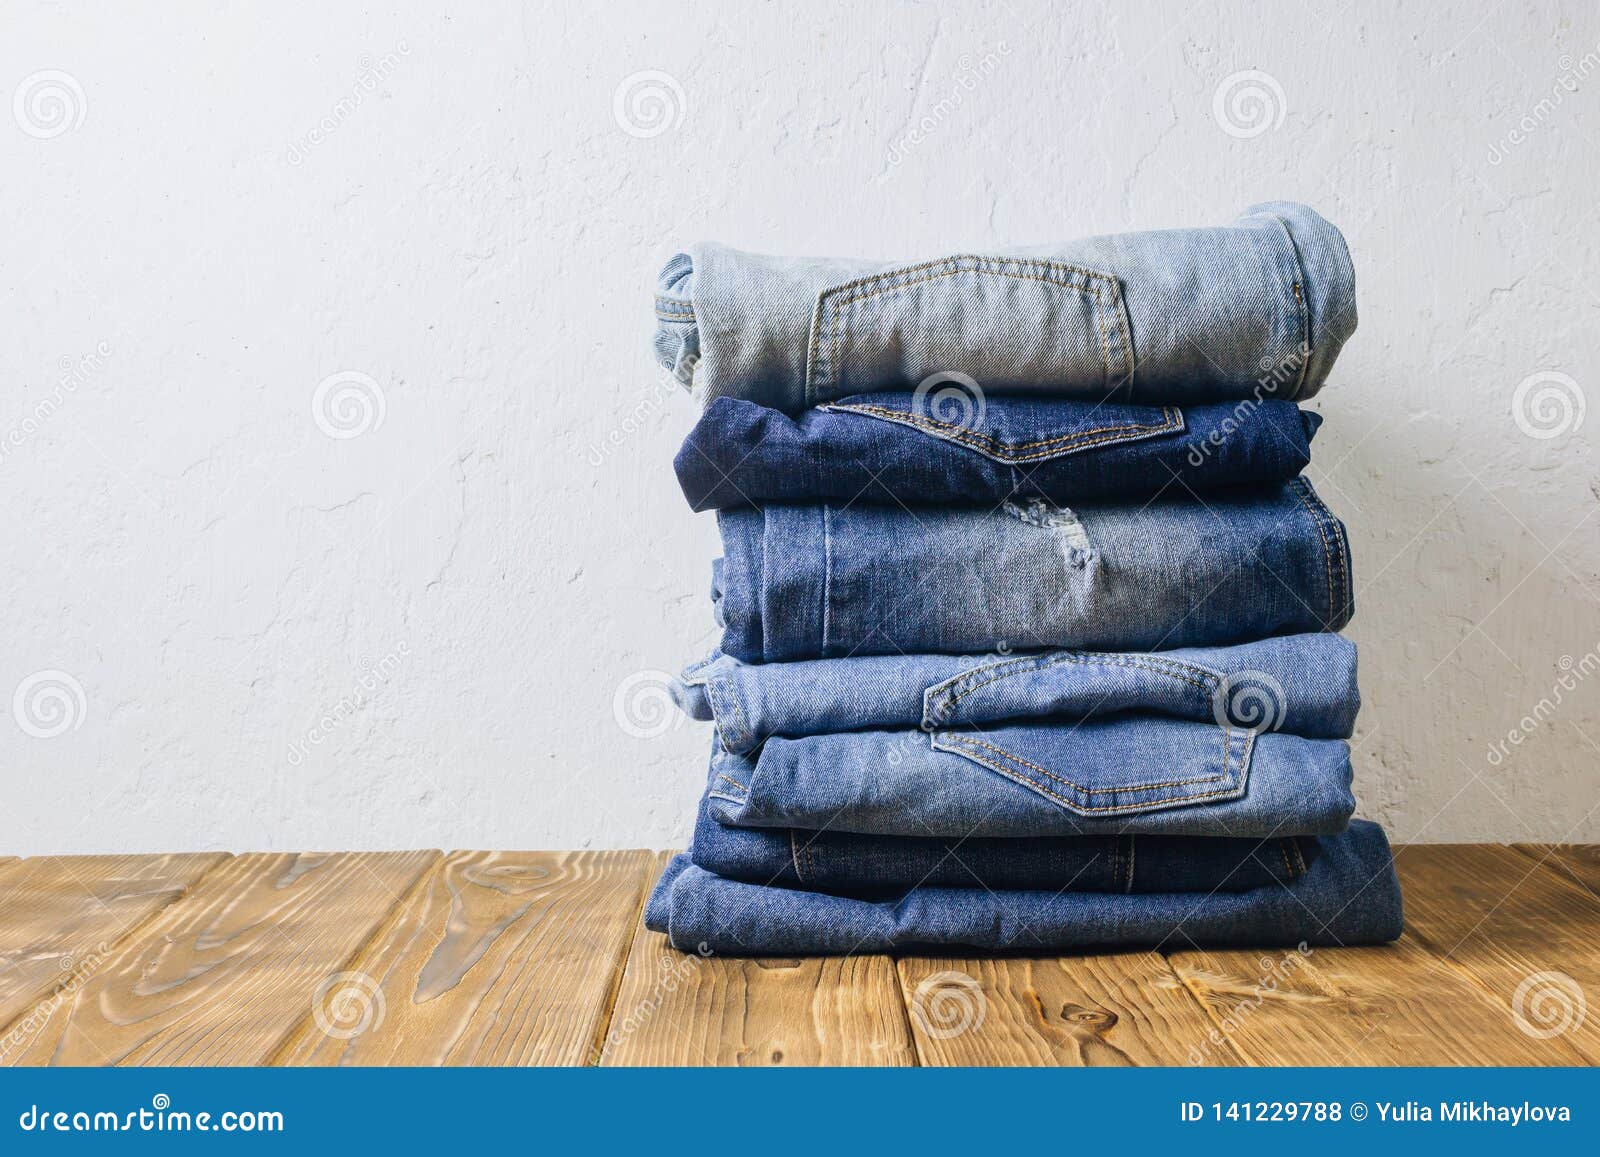 Jeans Denim Cloth Garment Monochrome Blue Textile Stacked on Wooden ...